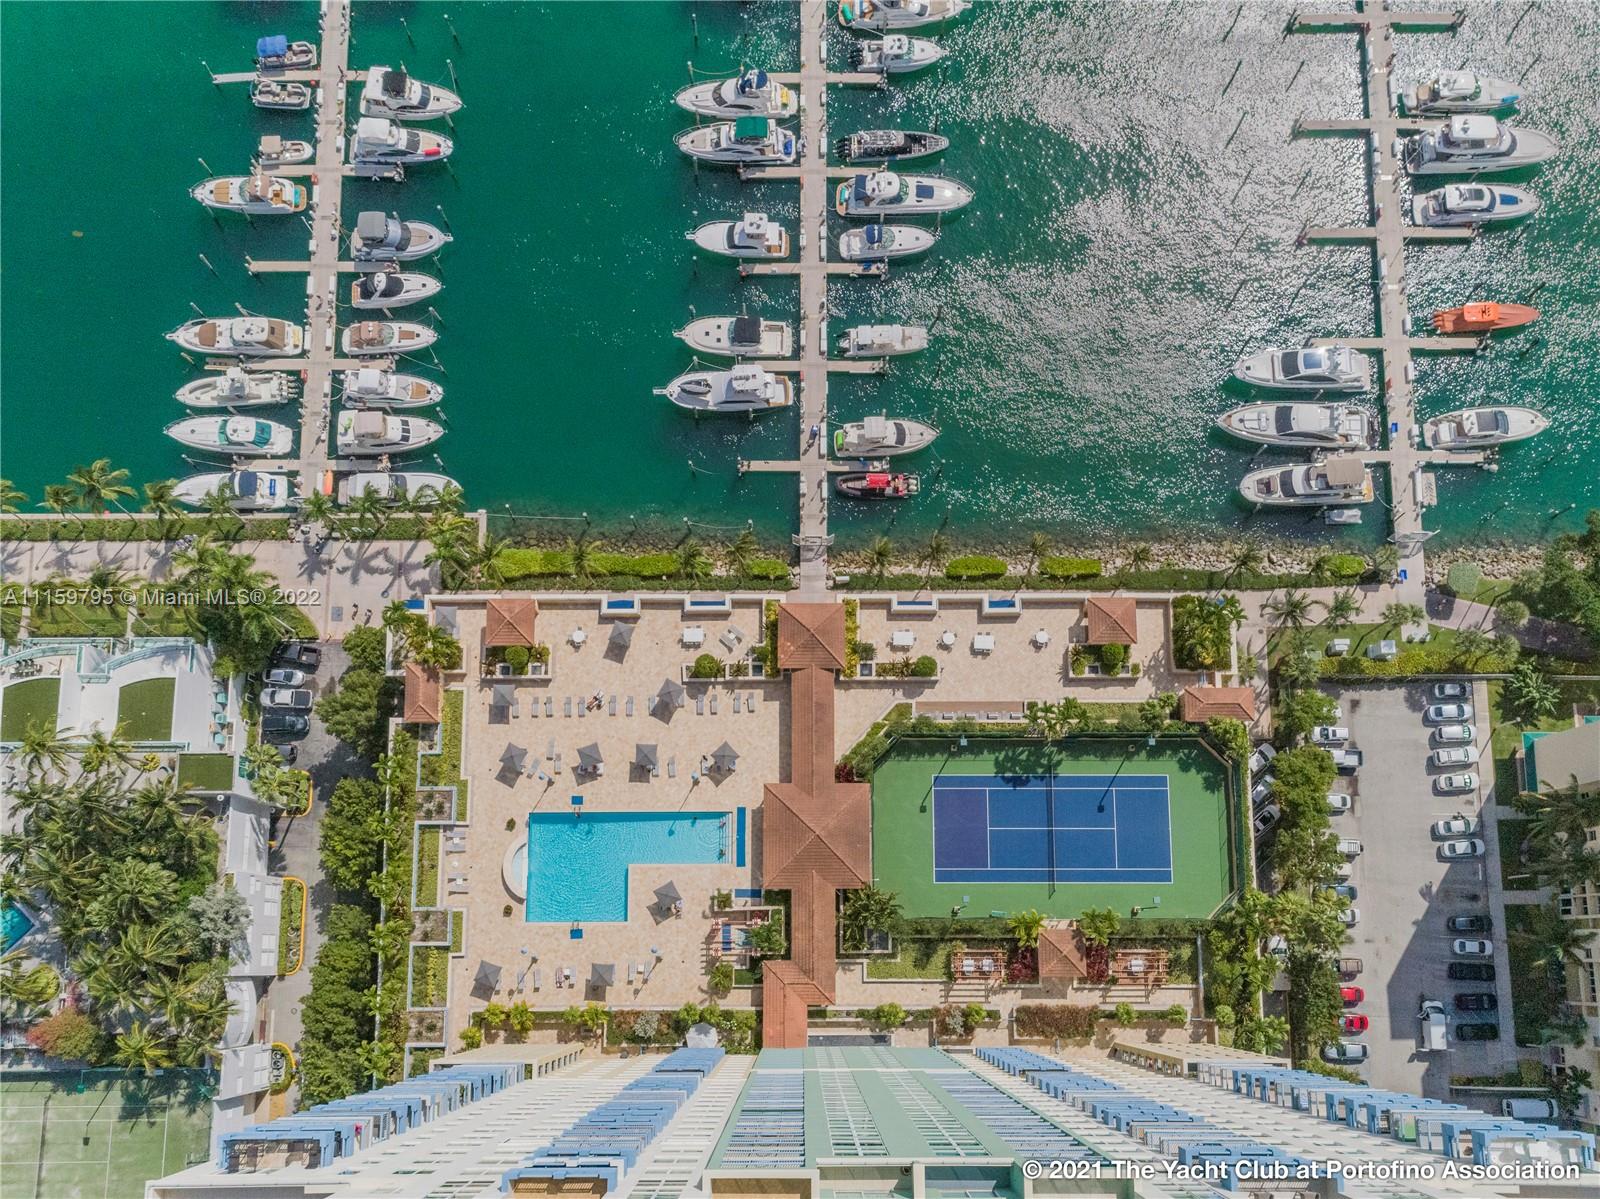 Yacht Club at Portofino image #12